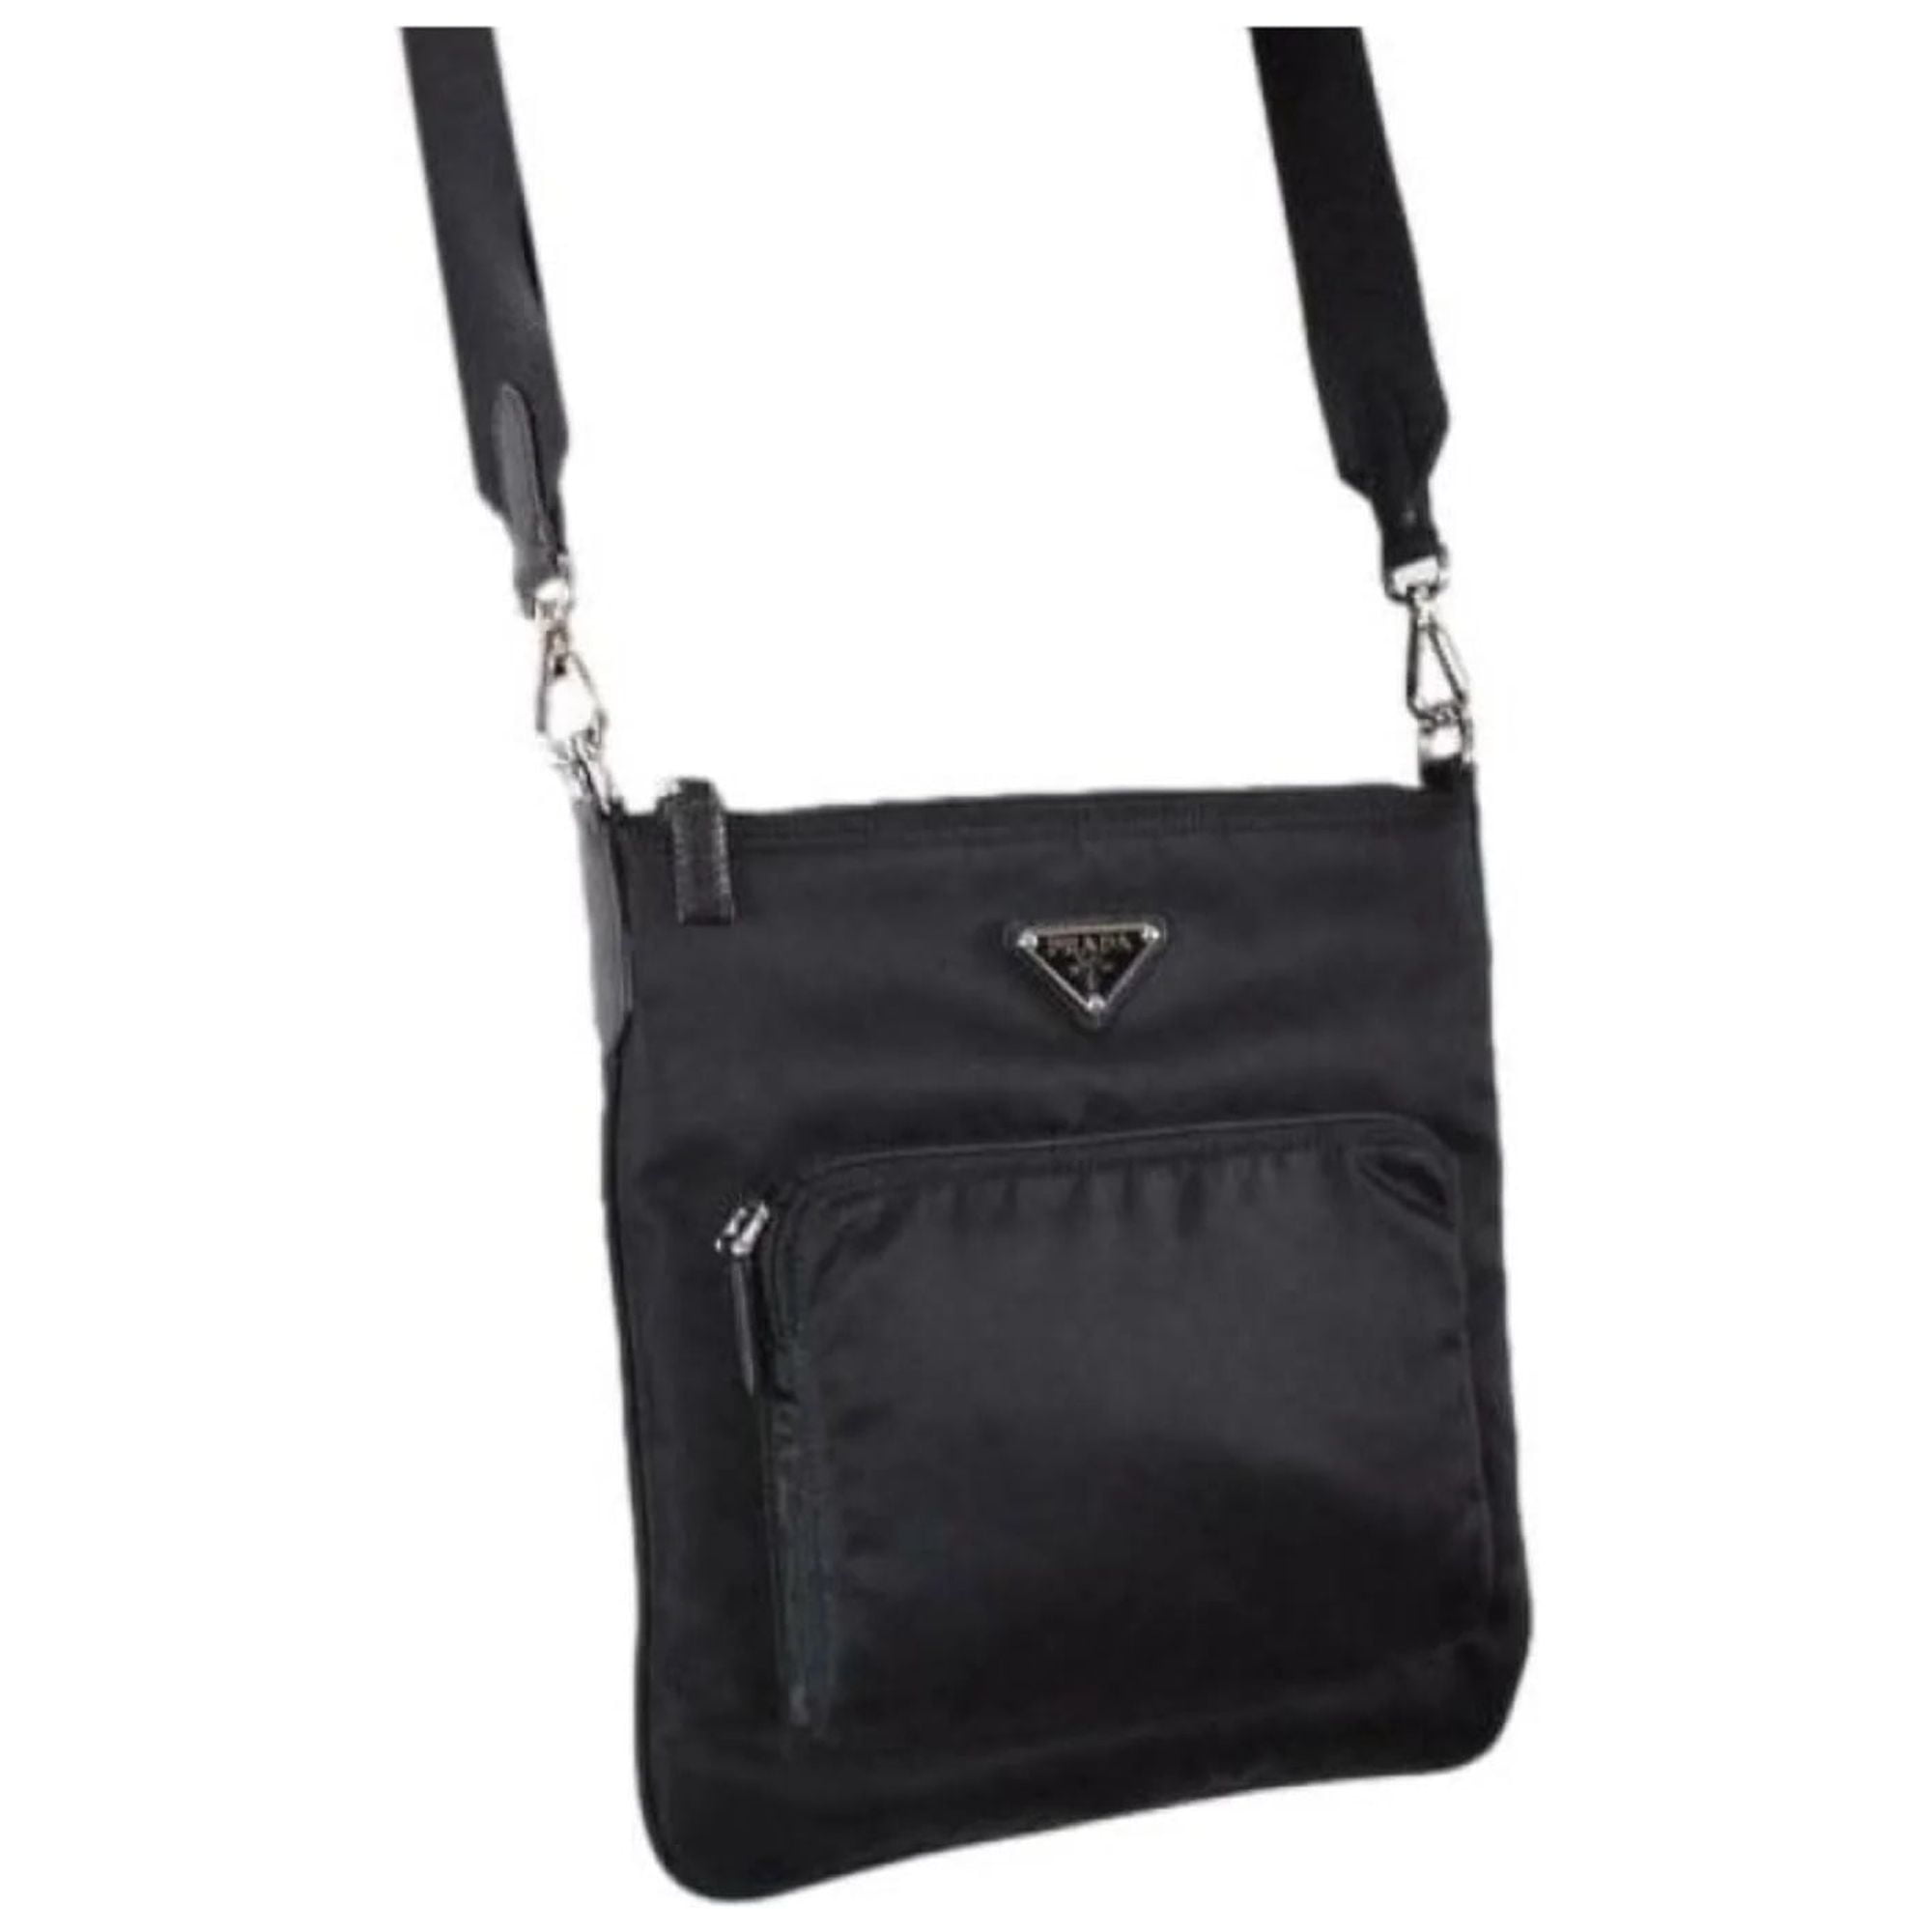 Prada Prada Shoulder Bag / Crossbody Bag 1BH026 Black buy in United States  with free shipping CosmoStore